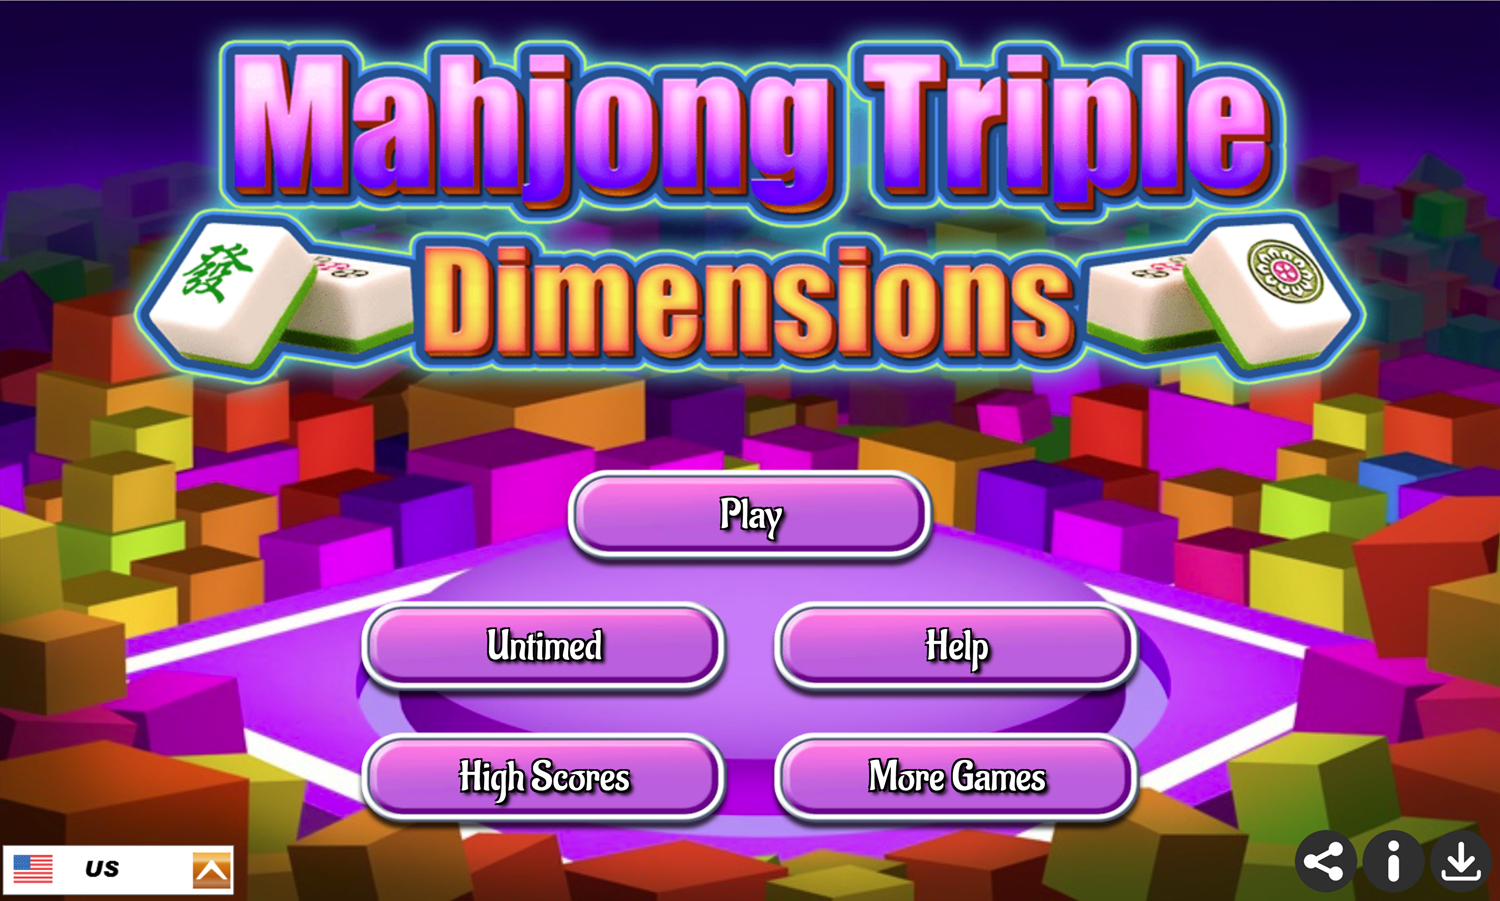 Mahjong Triple Dimensions Game Welcome Screen Screenshot.